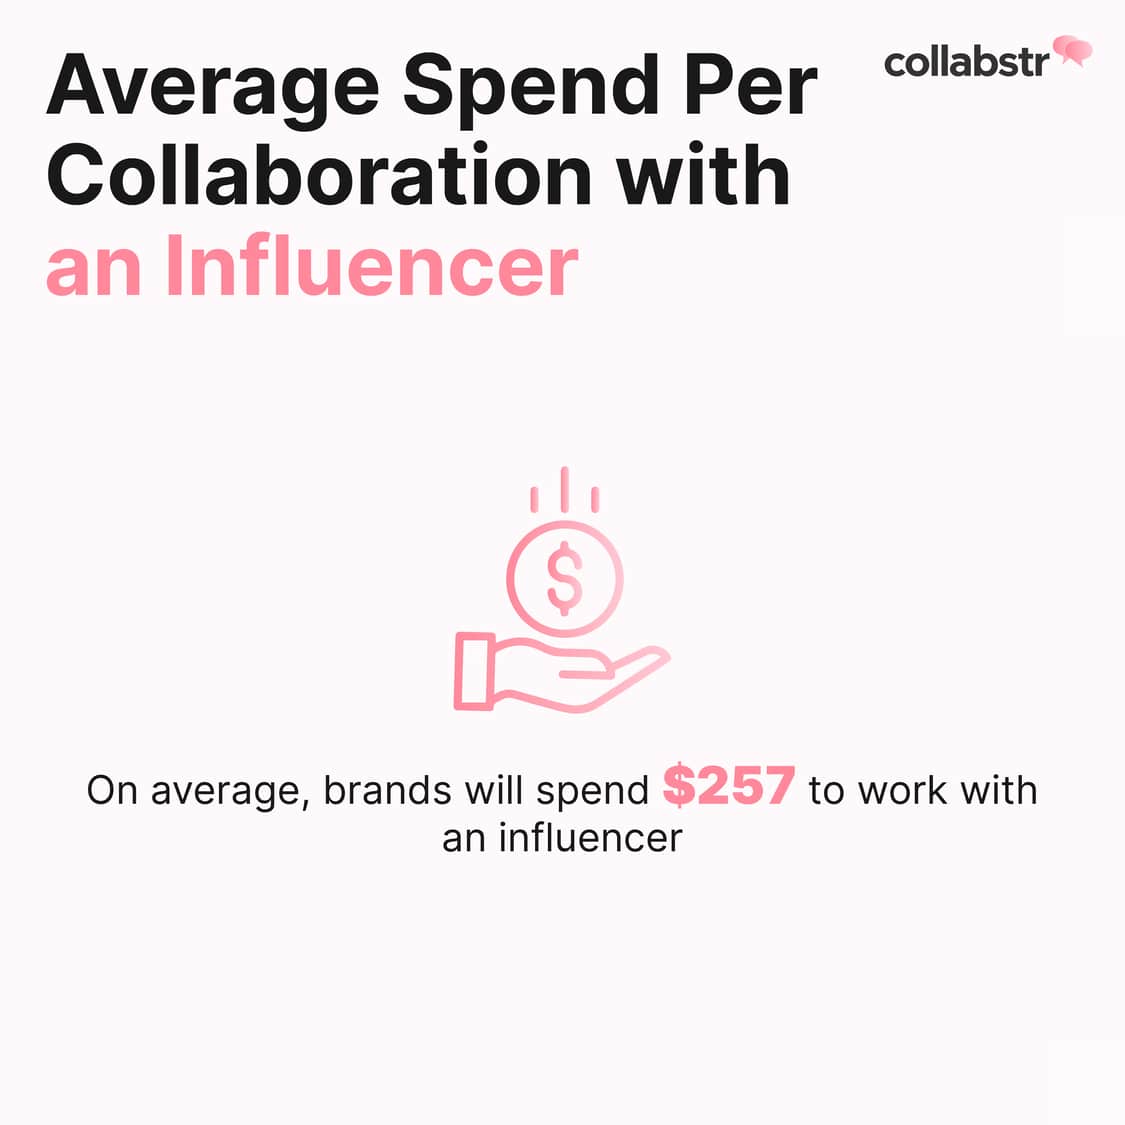 Brands spend $257 per influencer on average.